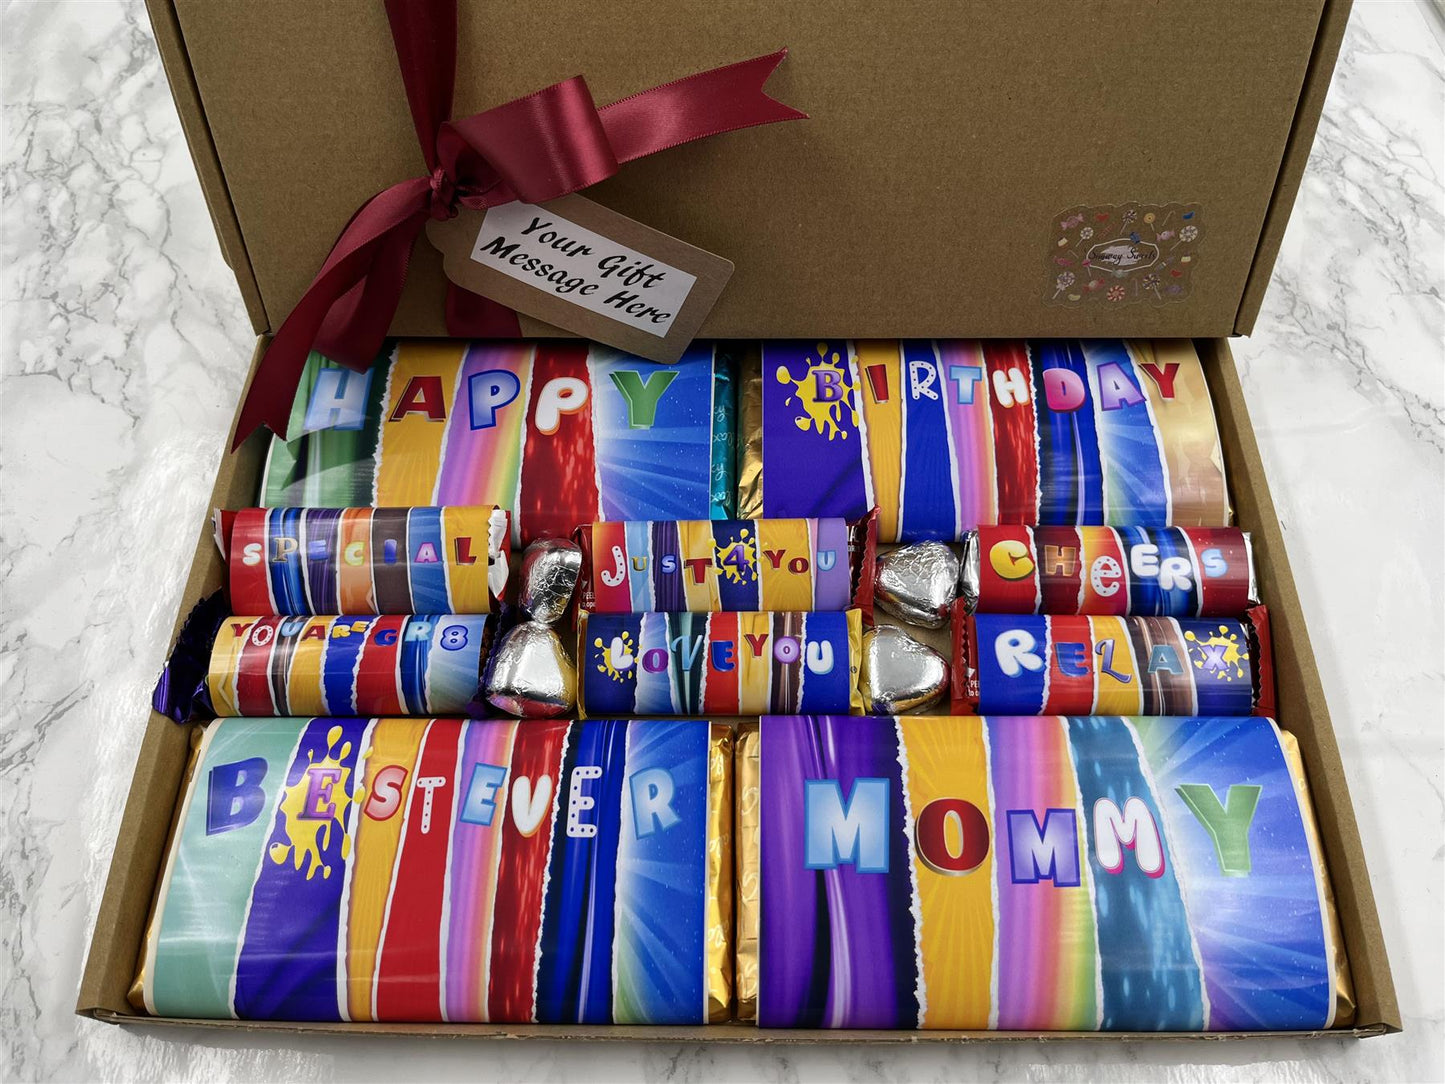 Fun Novelty Birthday Chocolate Wrapper Gift Box - Mommy